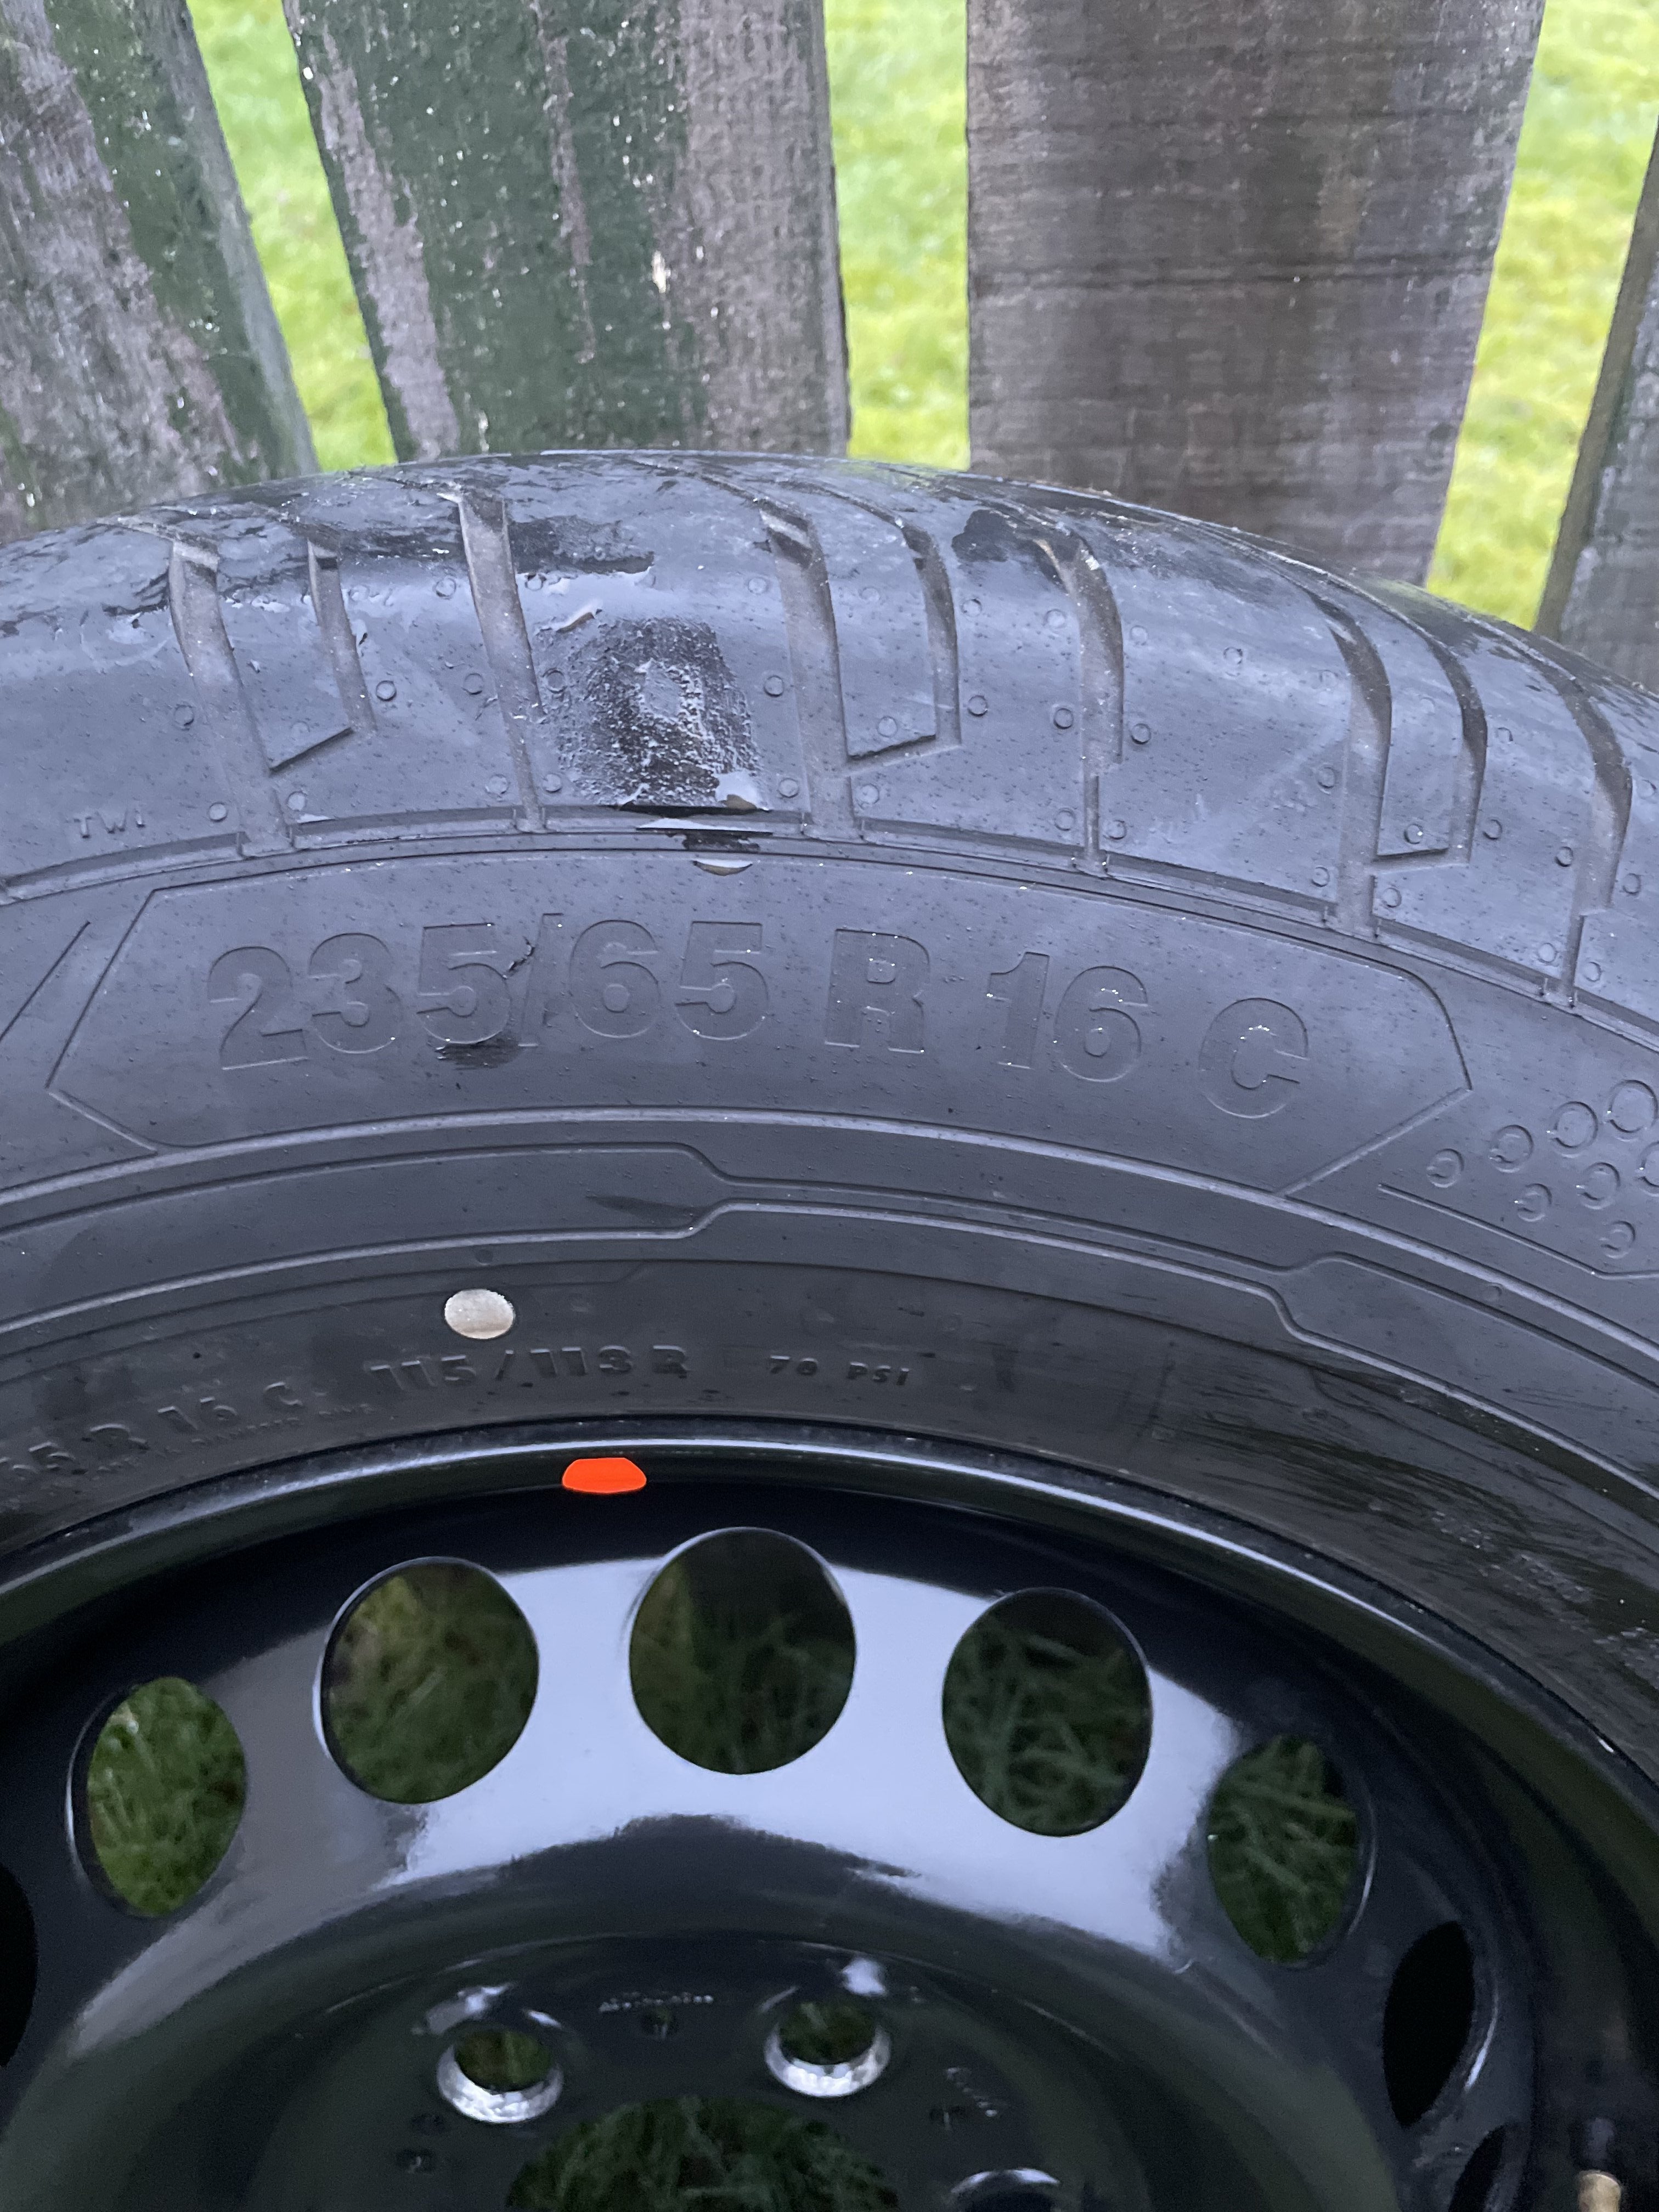 235/65/16c van continental tyres (As new )